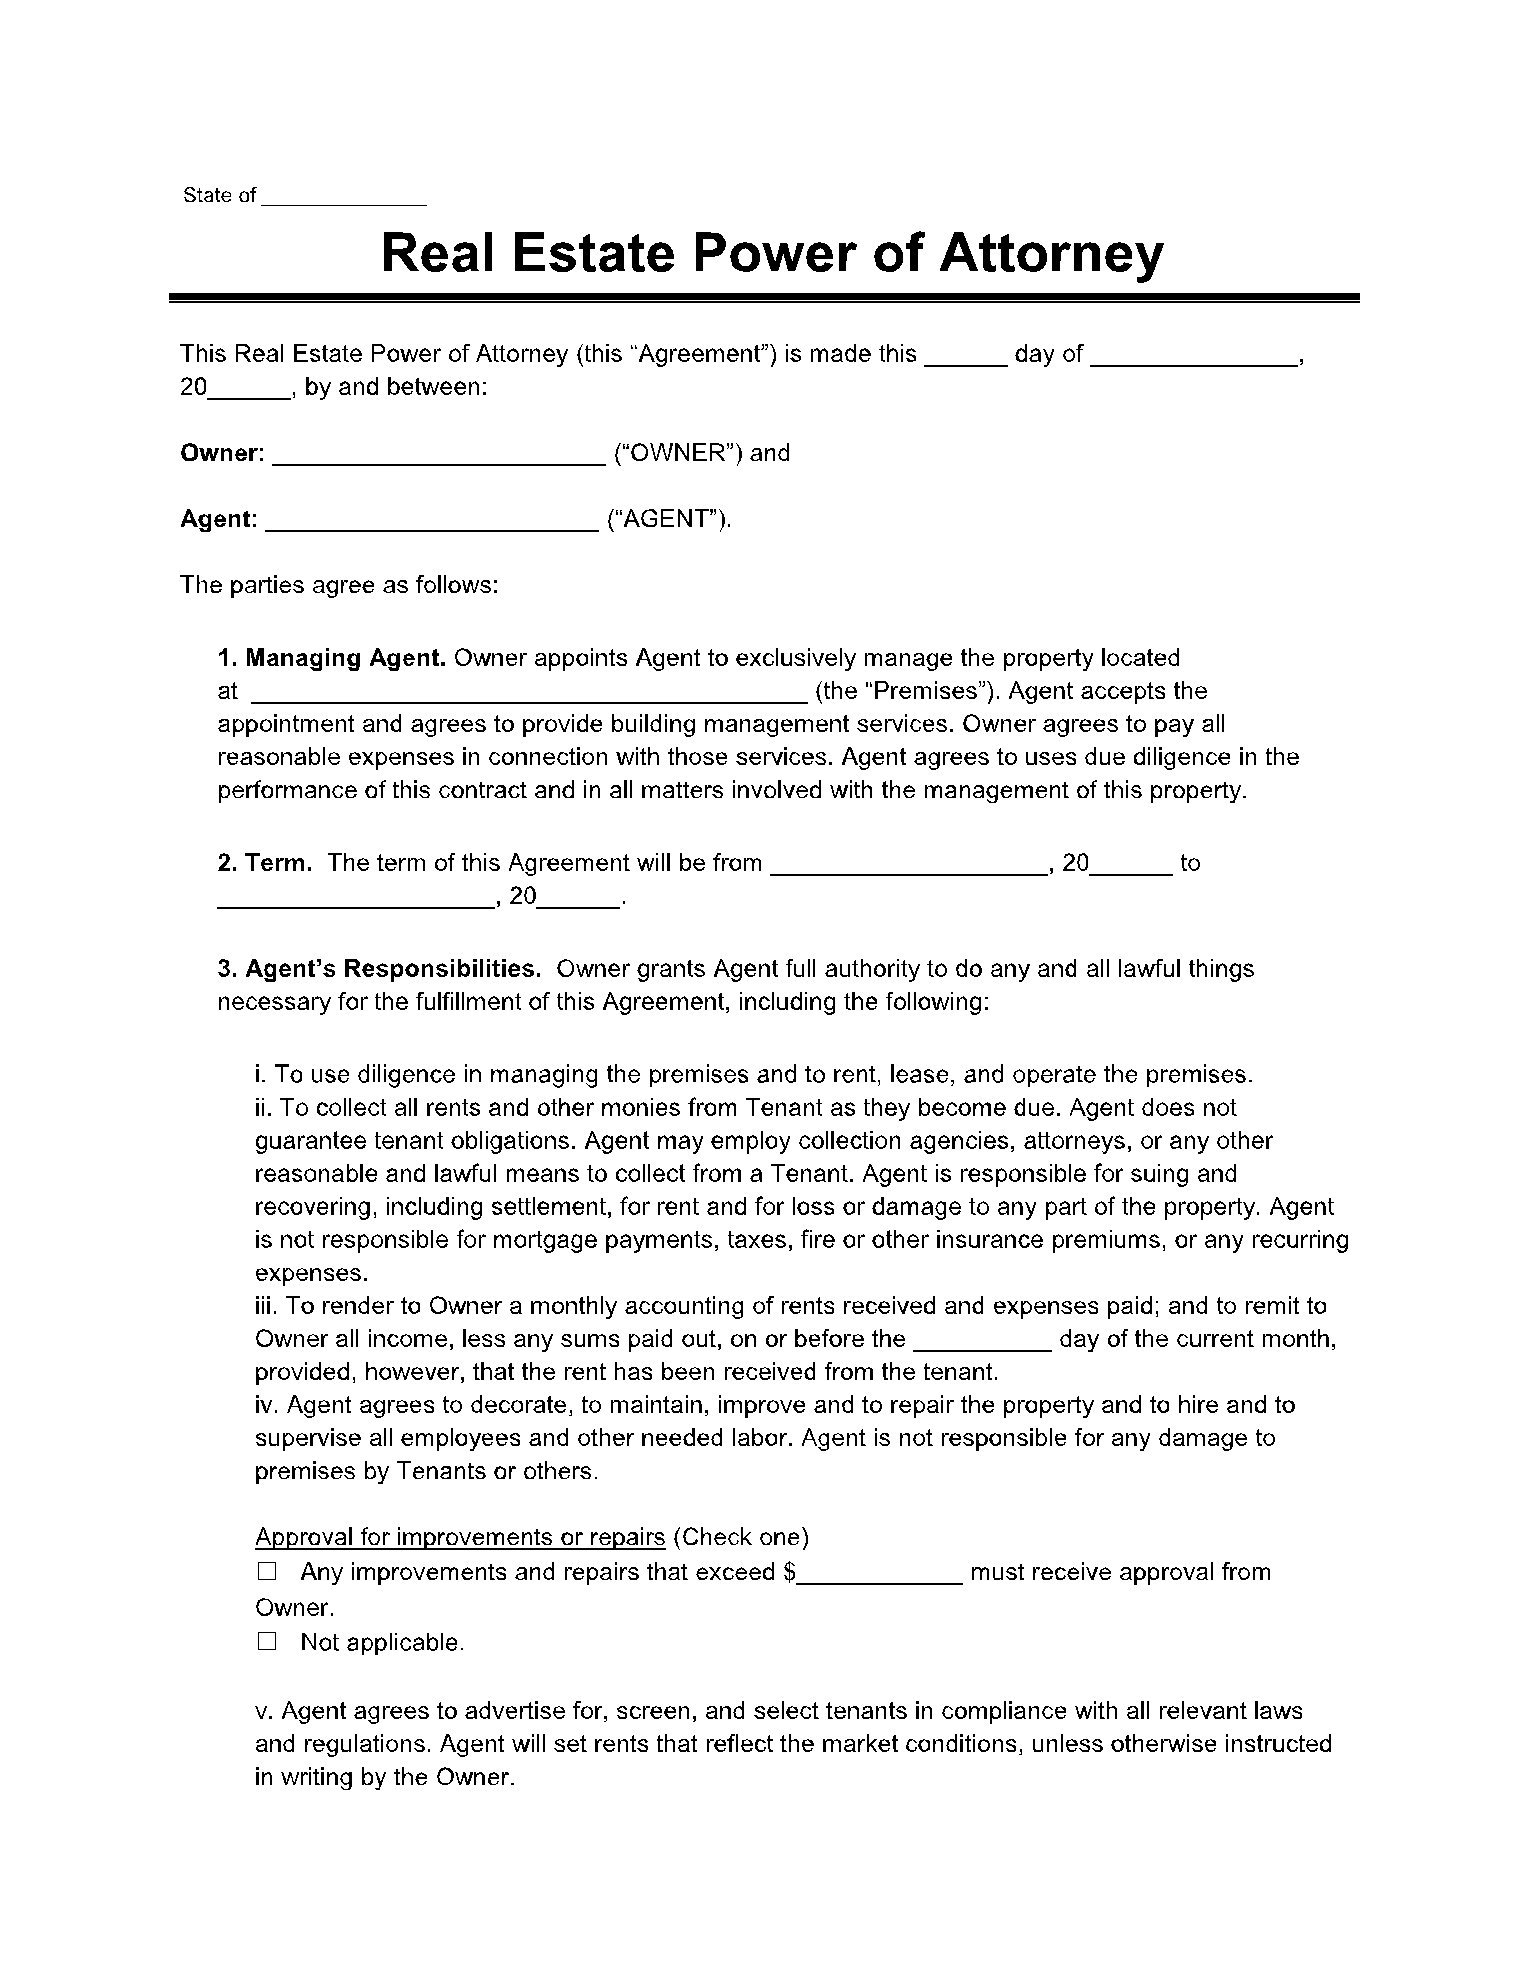 Power of Attorney in Ohio